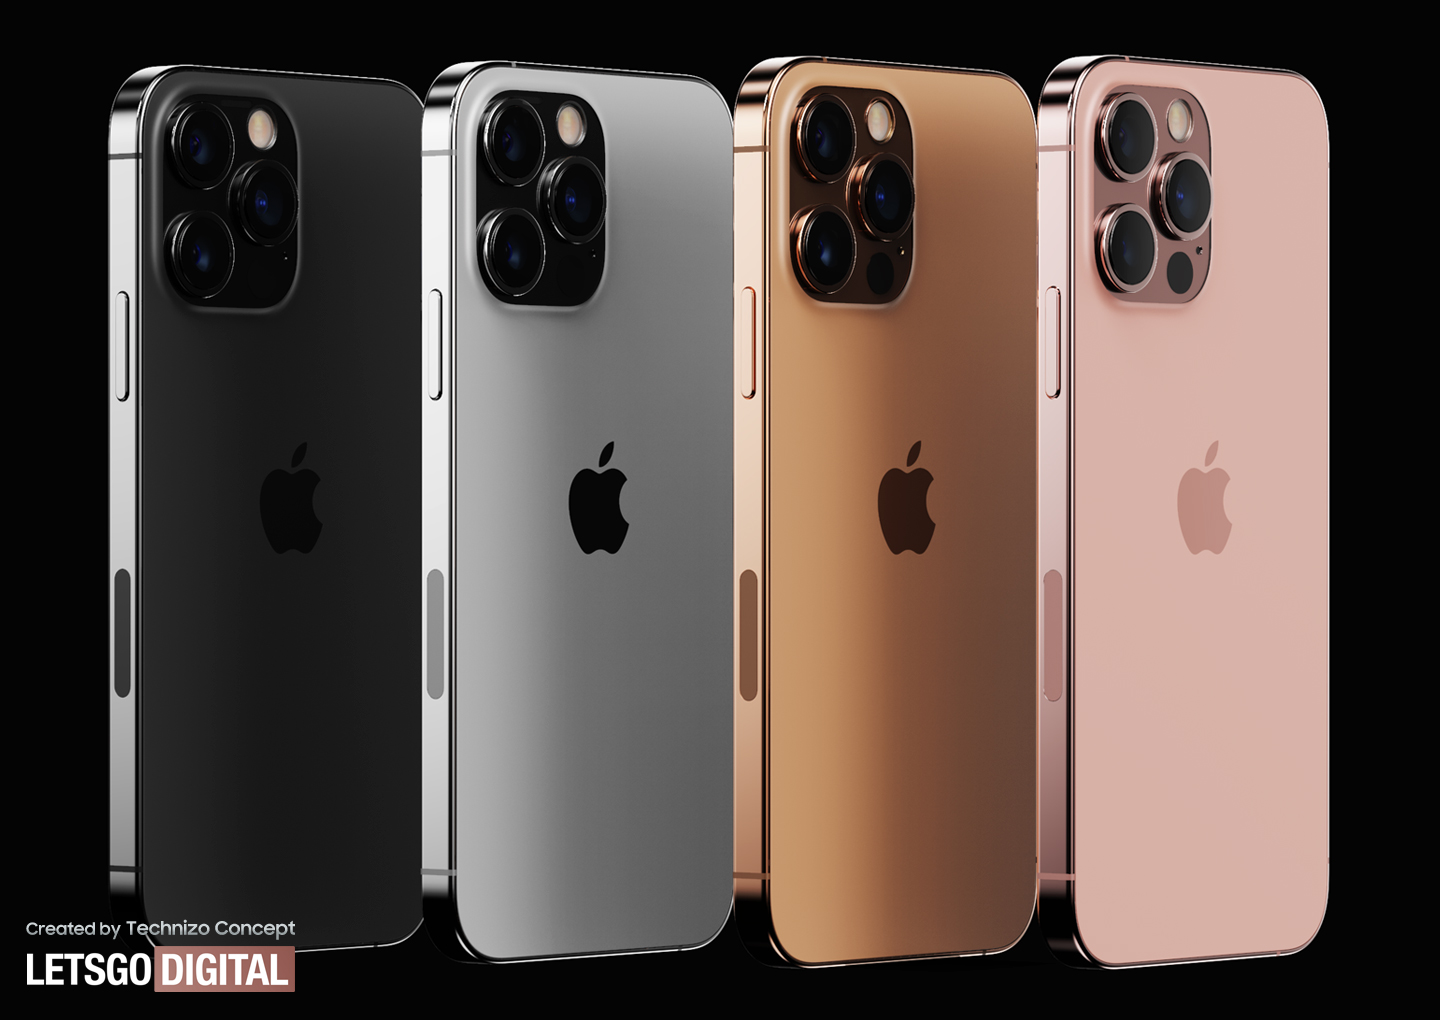 Iphone 13 Pro Quelle Couleur Choisir Un bellissimo video concept mostra l'iPhone 13 Pro in tutti i colori